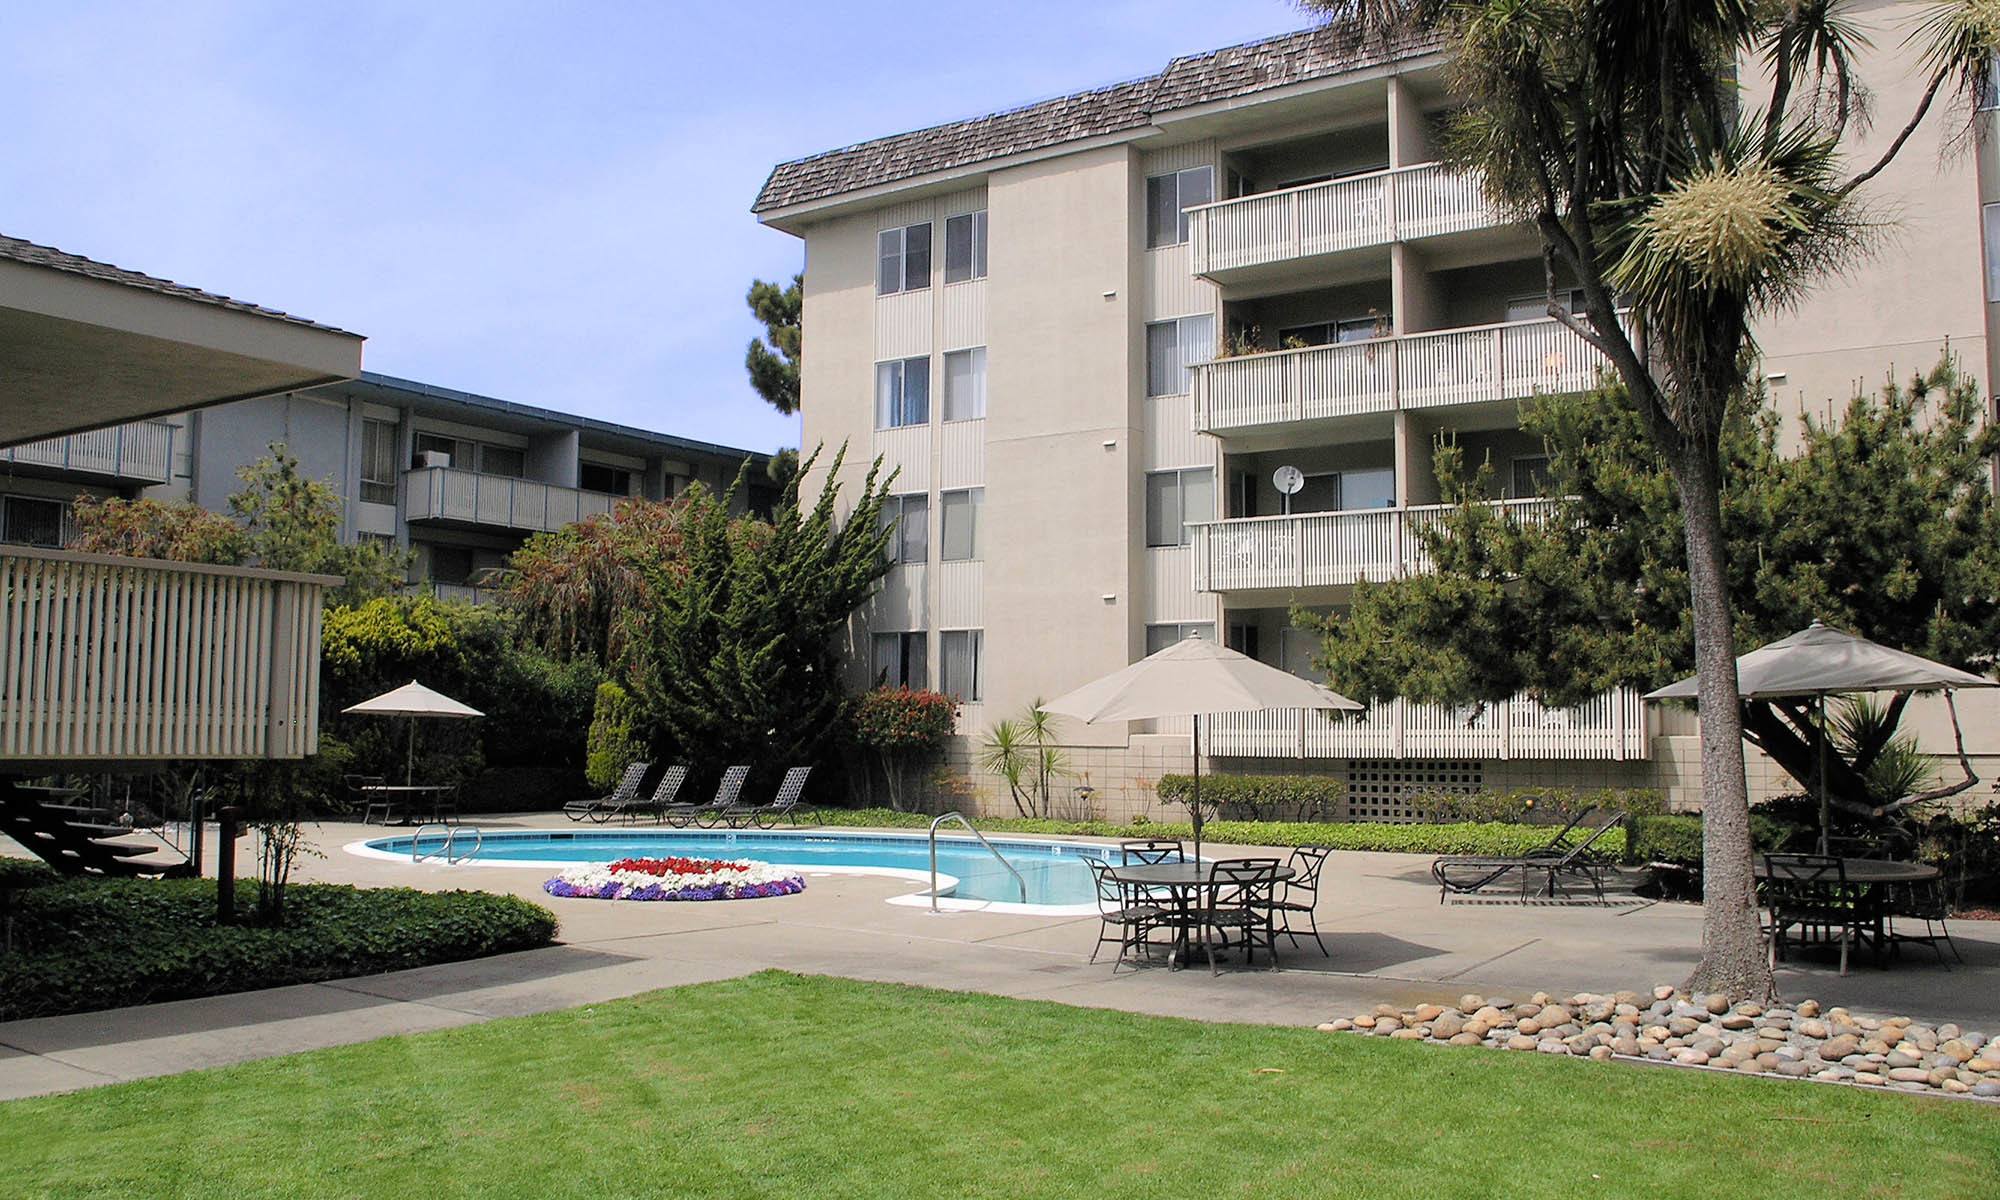 Waterfront Alameda, CA Apartments  Tower Apartment Homes